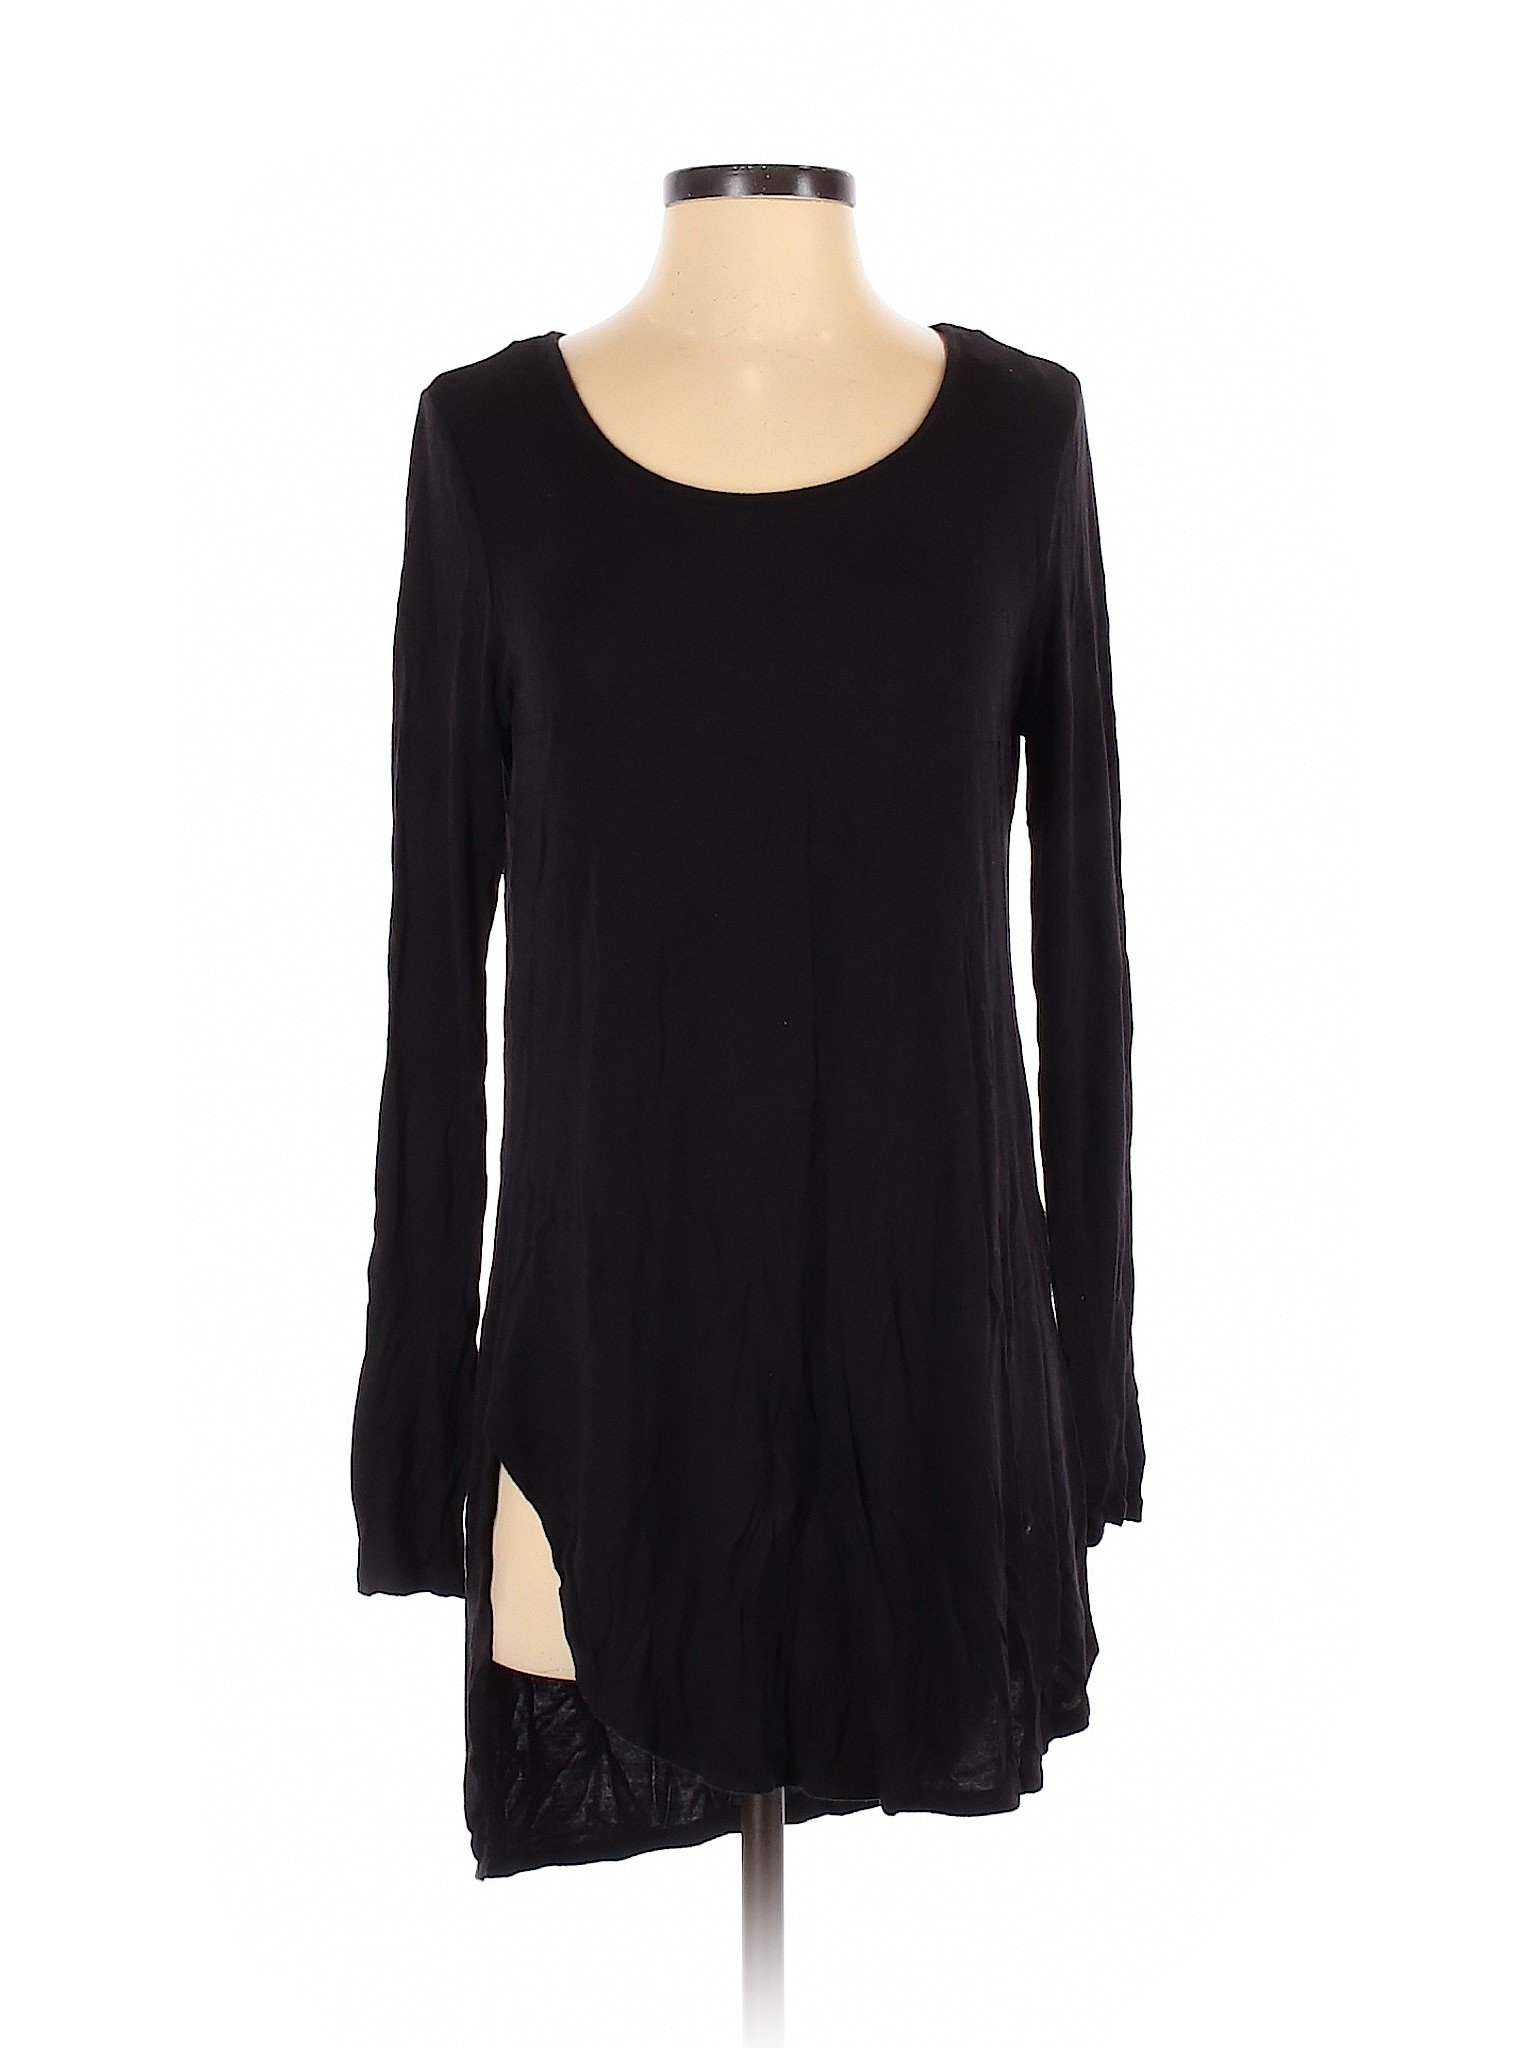 Apt. 9 Women Black Casual Dress S | eBay